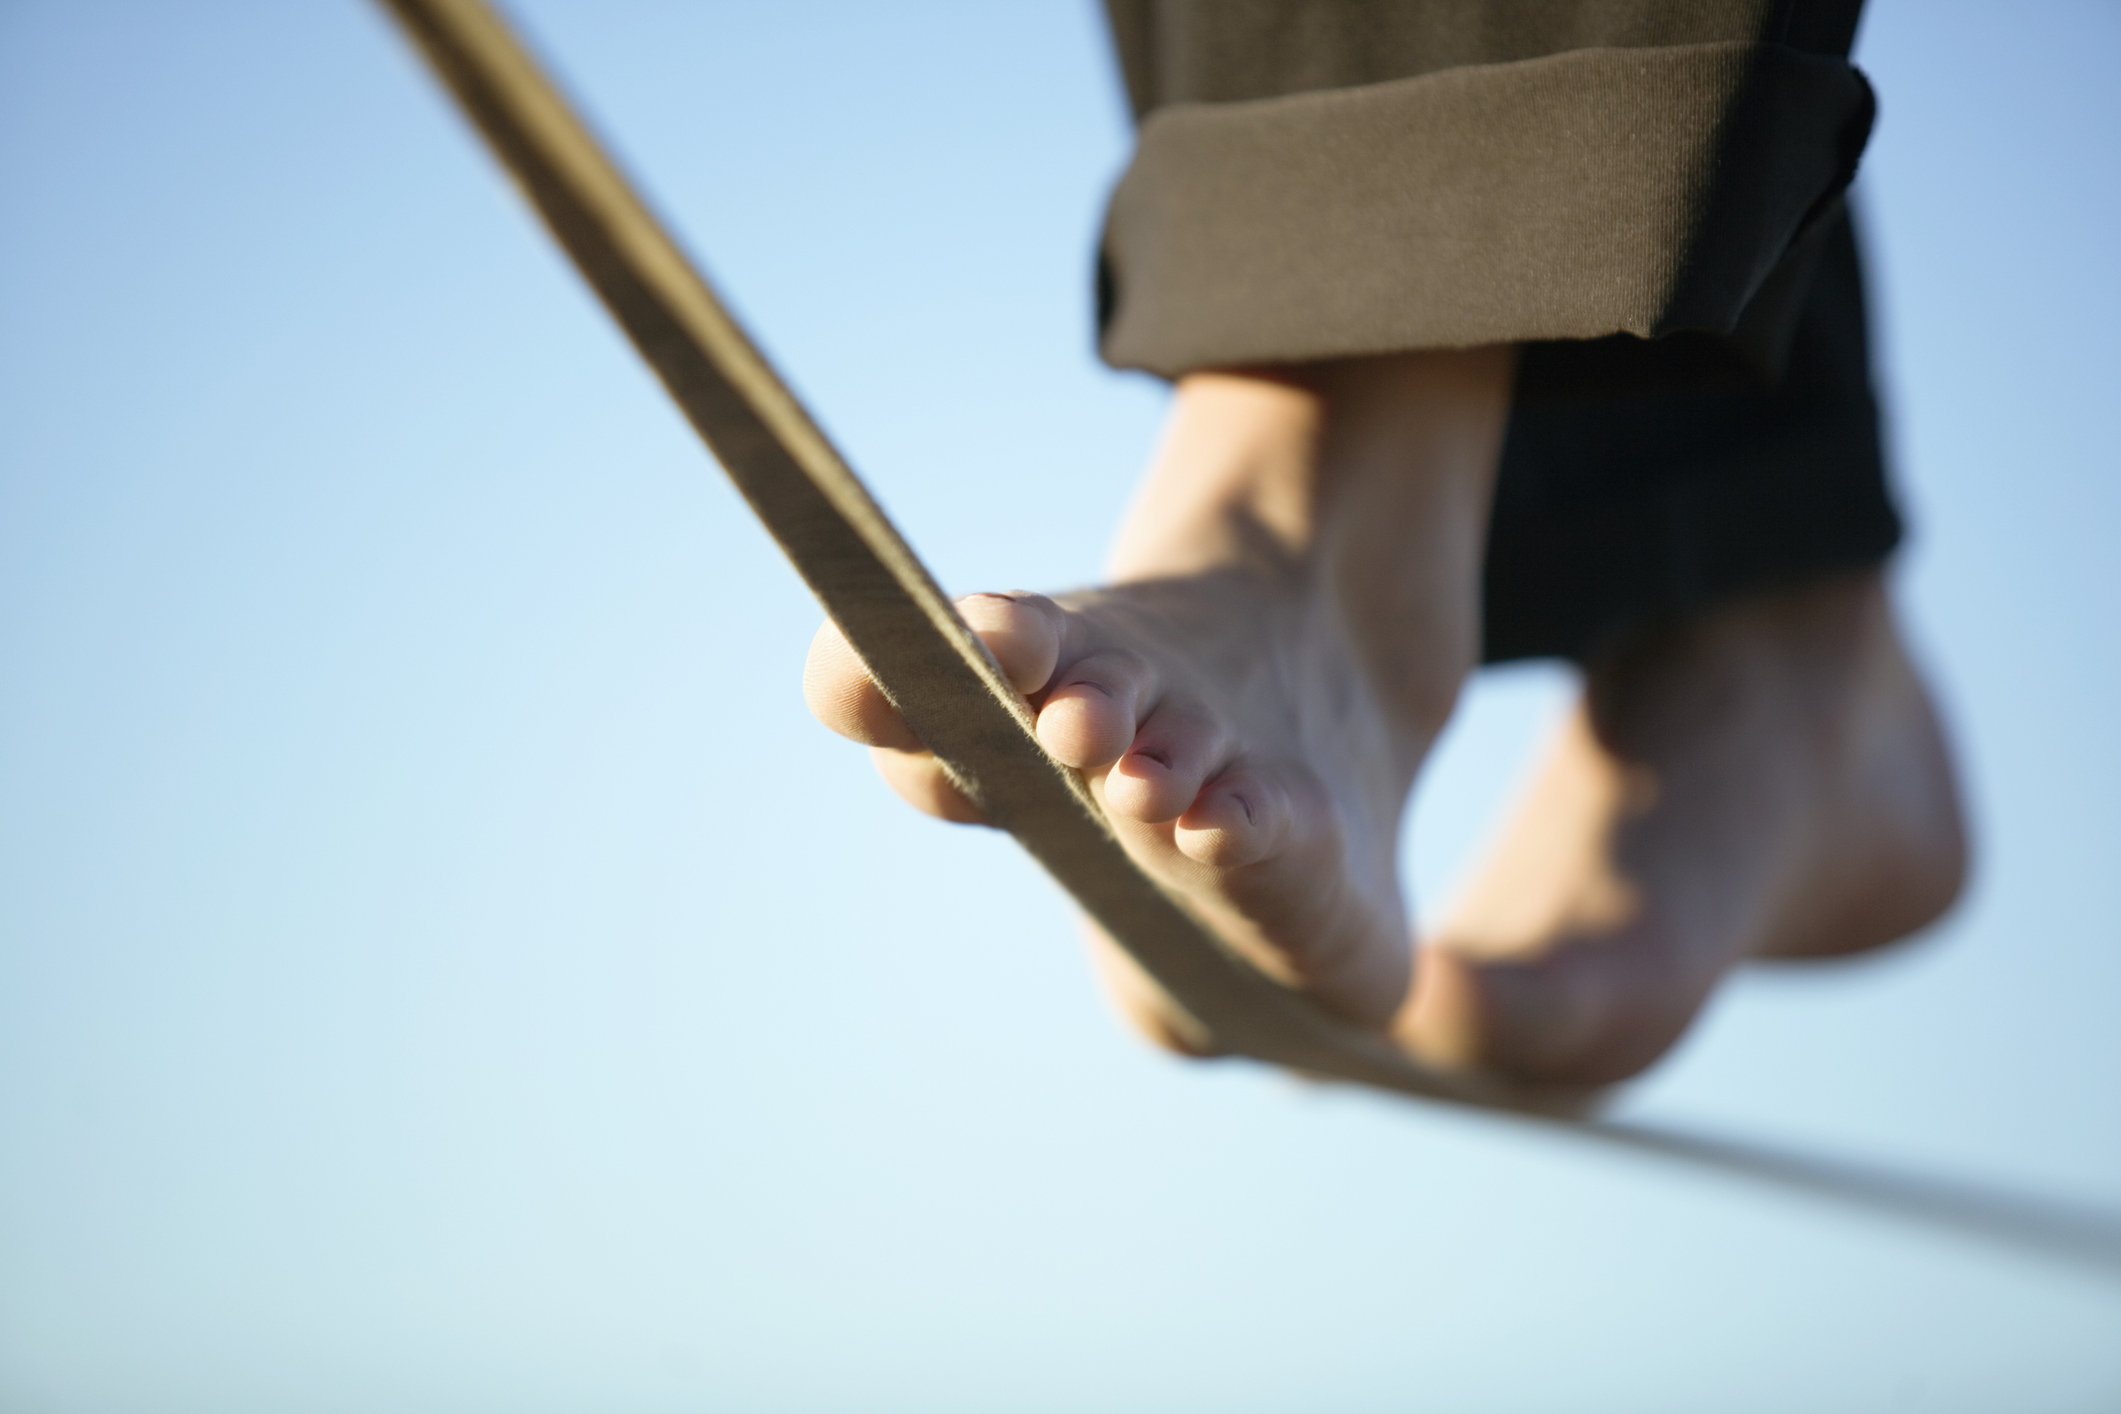 Woman slacklining in bare feet;  tightrope